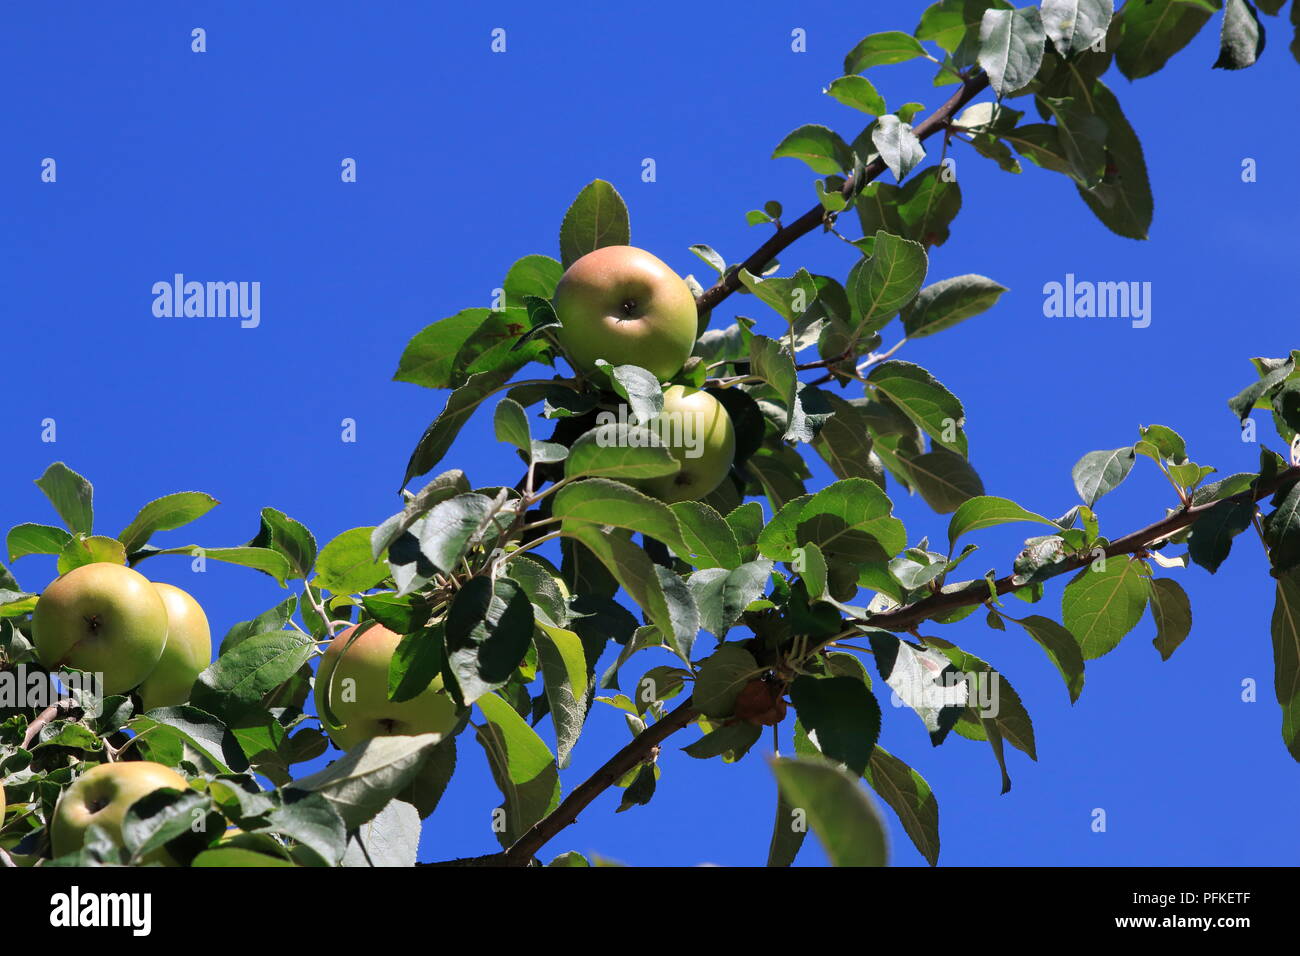 Azéméli Apfel, großer Menge, am Baum, hängend kurz vor der Ernte Banque D'Images